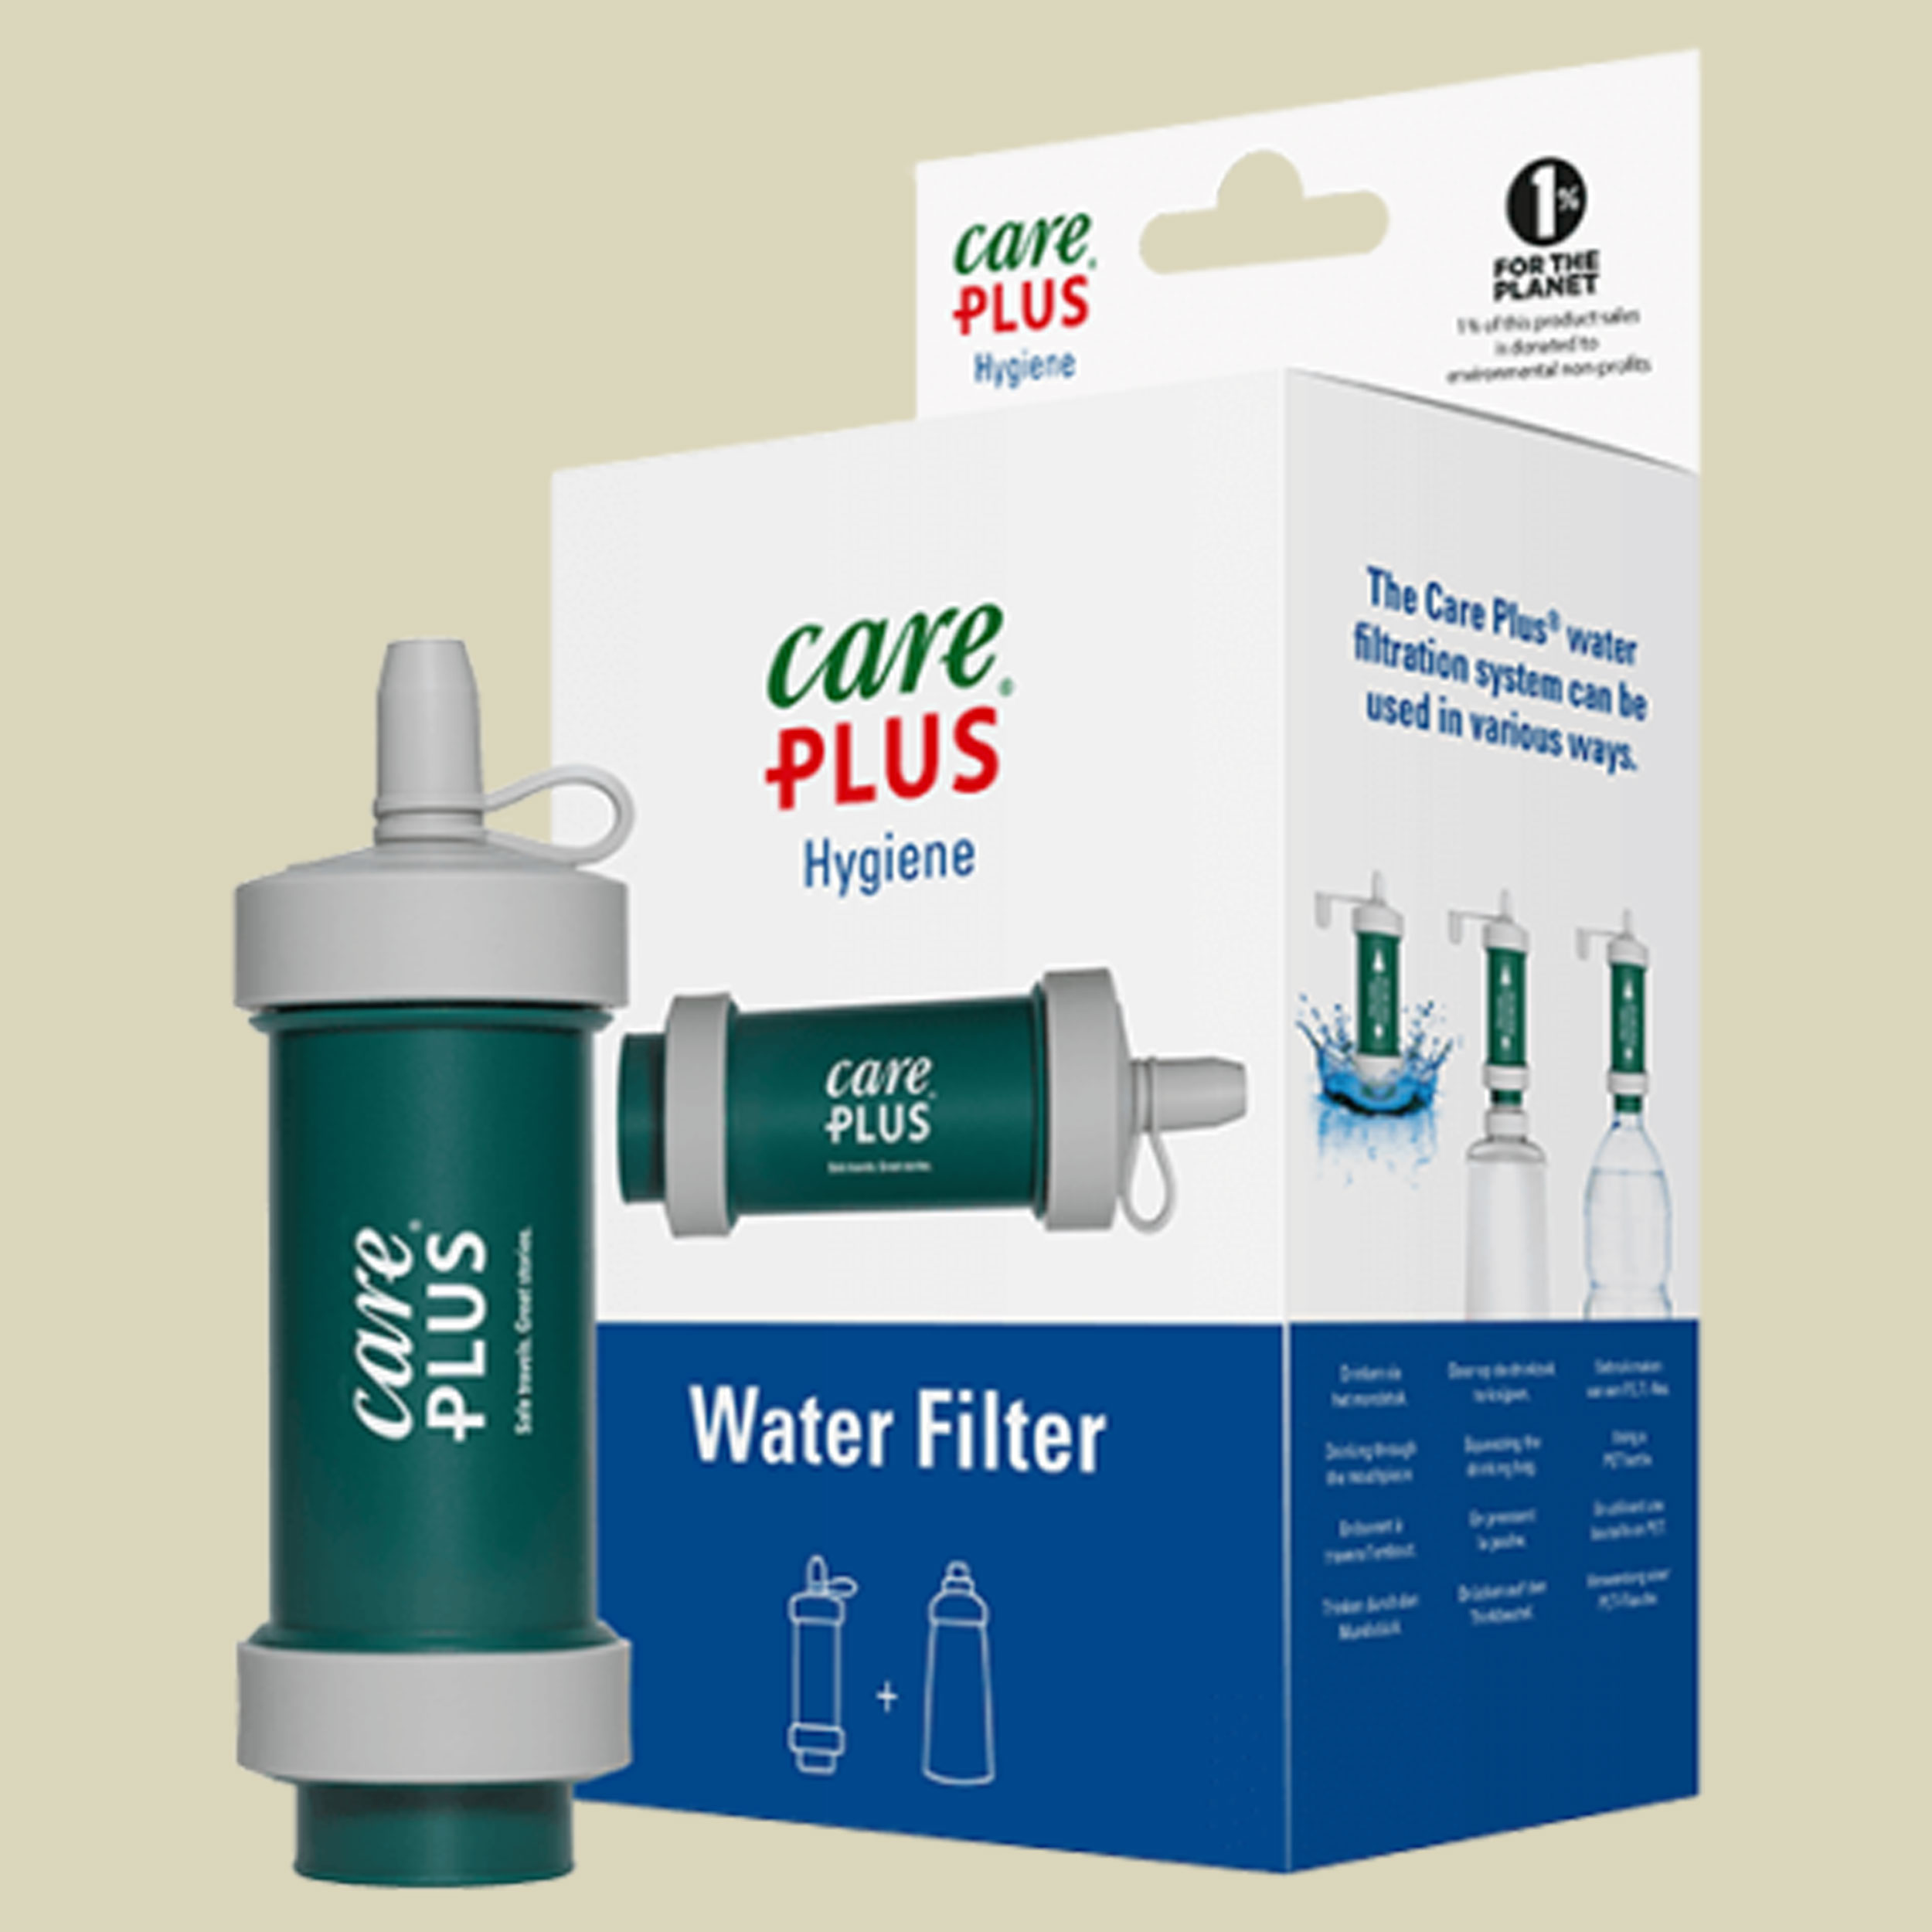 Care Plus Water Filter Farbe jungle green